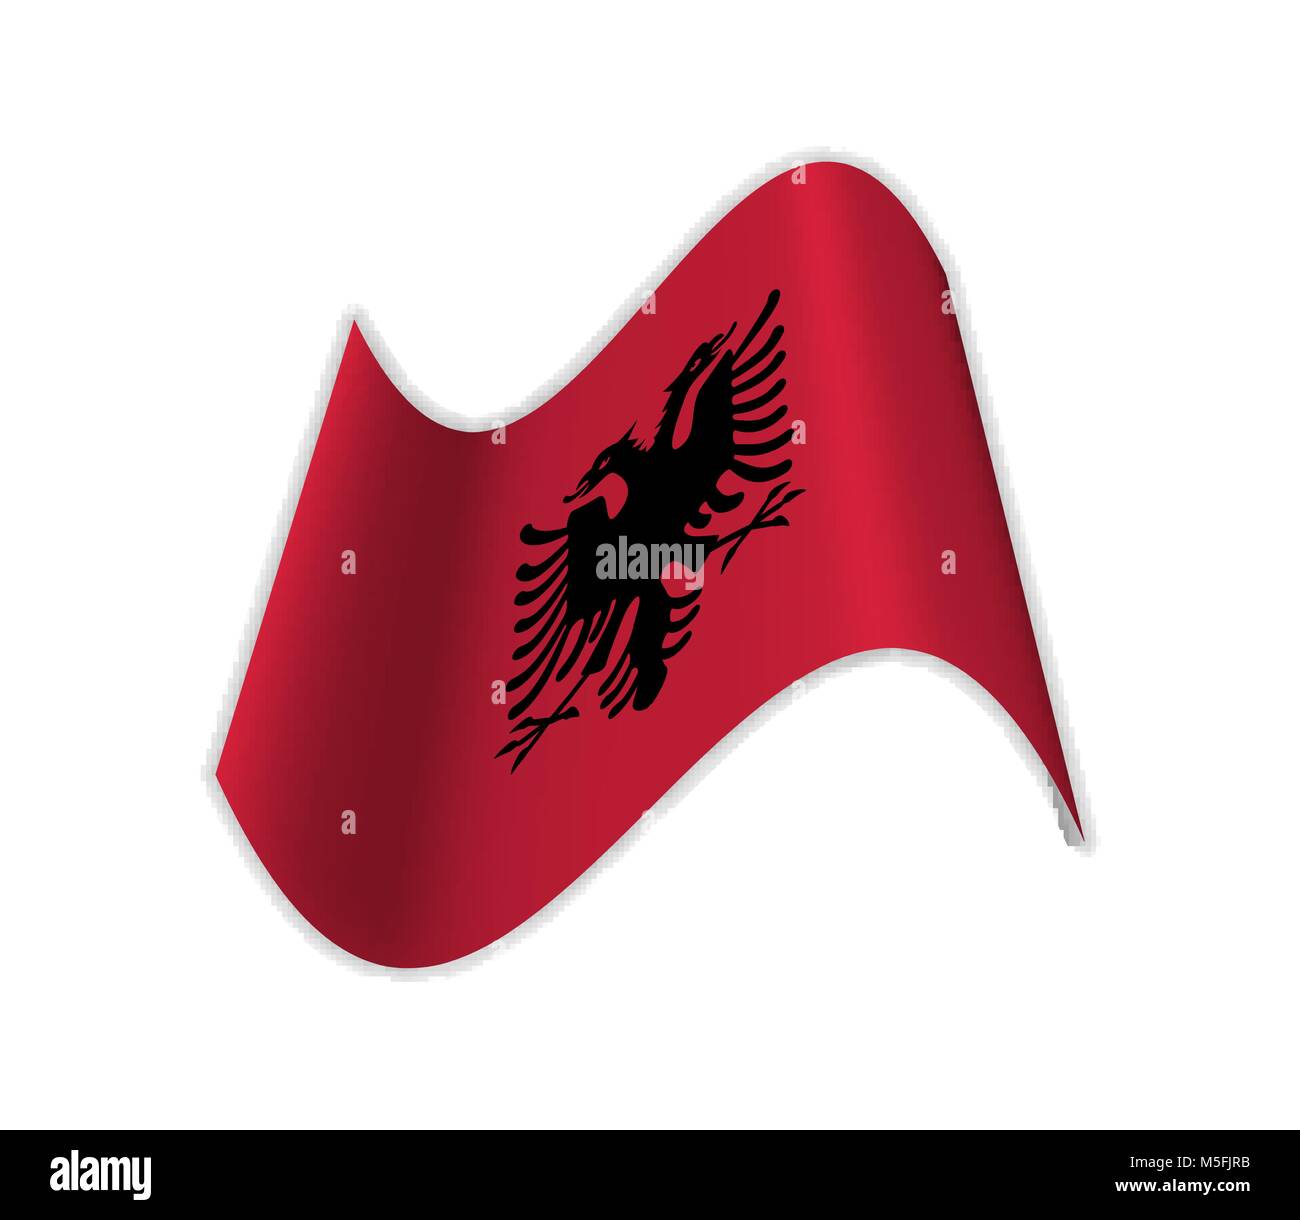 The Flag Of Albania. Vector illustration of a country. Balkan peninsula. Stock Vector